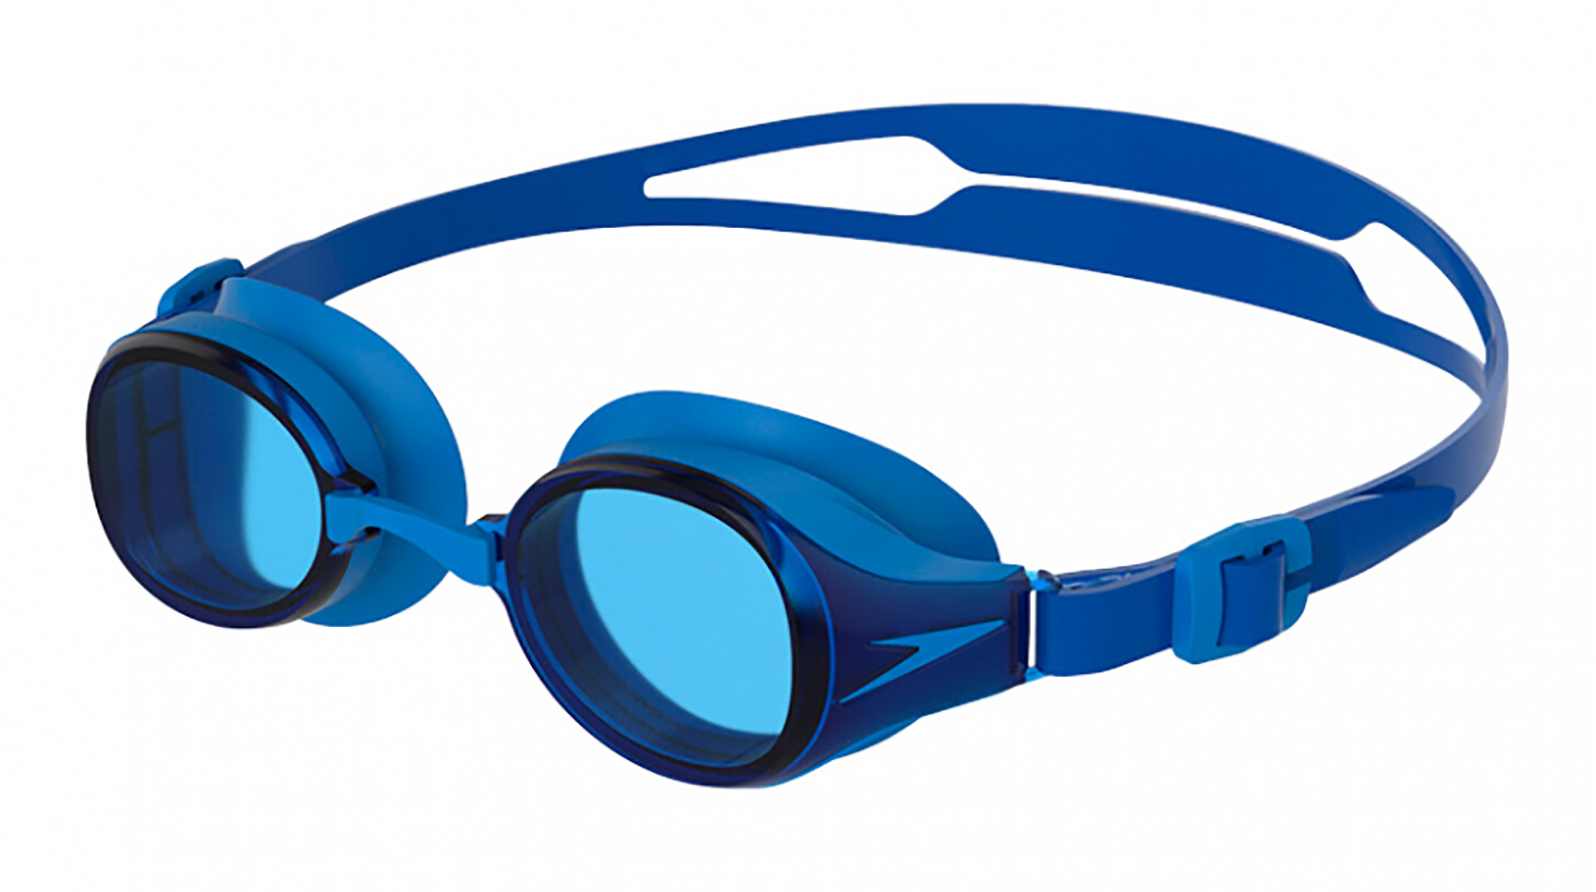 Speedo Очки для плавания Hydropure Optical F809 -5.5 speedo очки для плавания hydropure optical f809 5 5